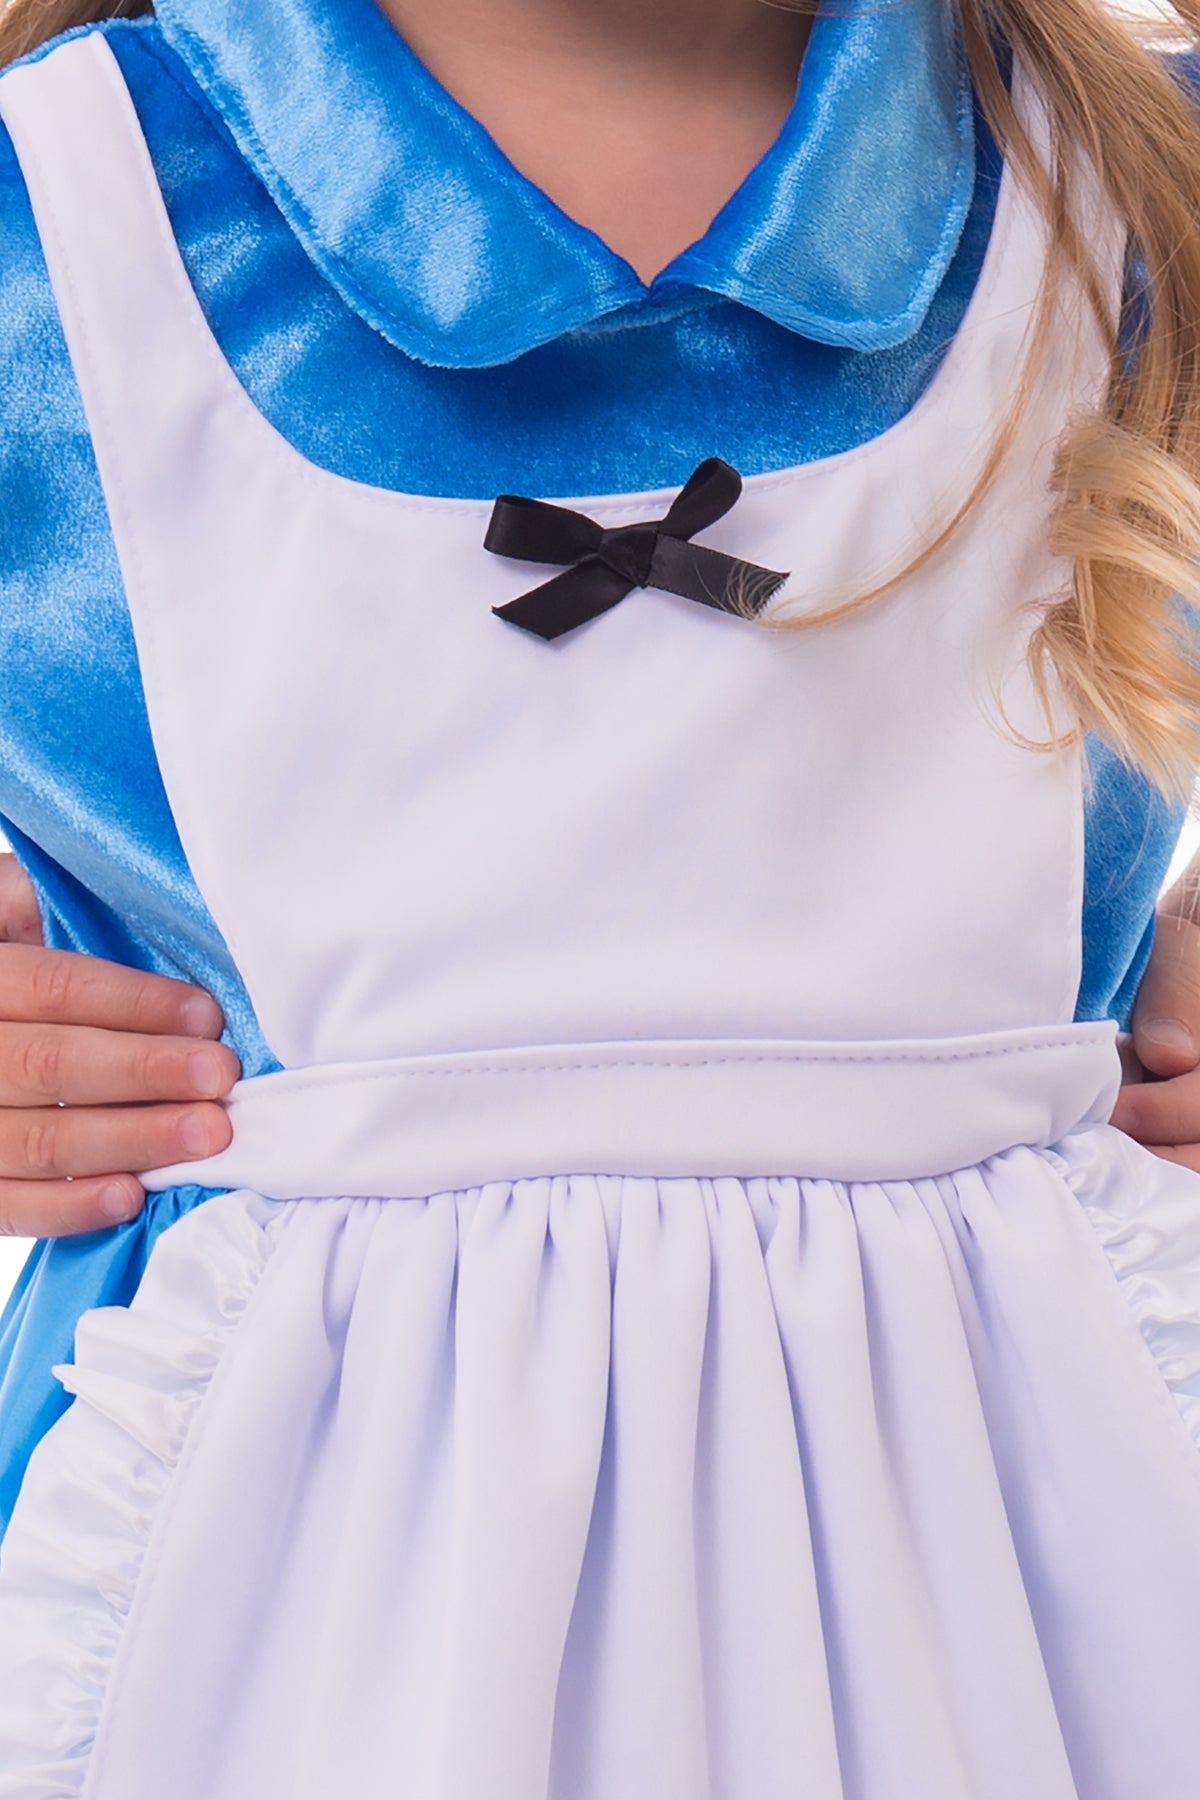 Alice in Wonderland Costume. Girls Sizes 5,6,7,8 